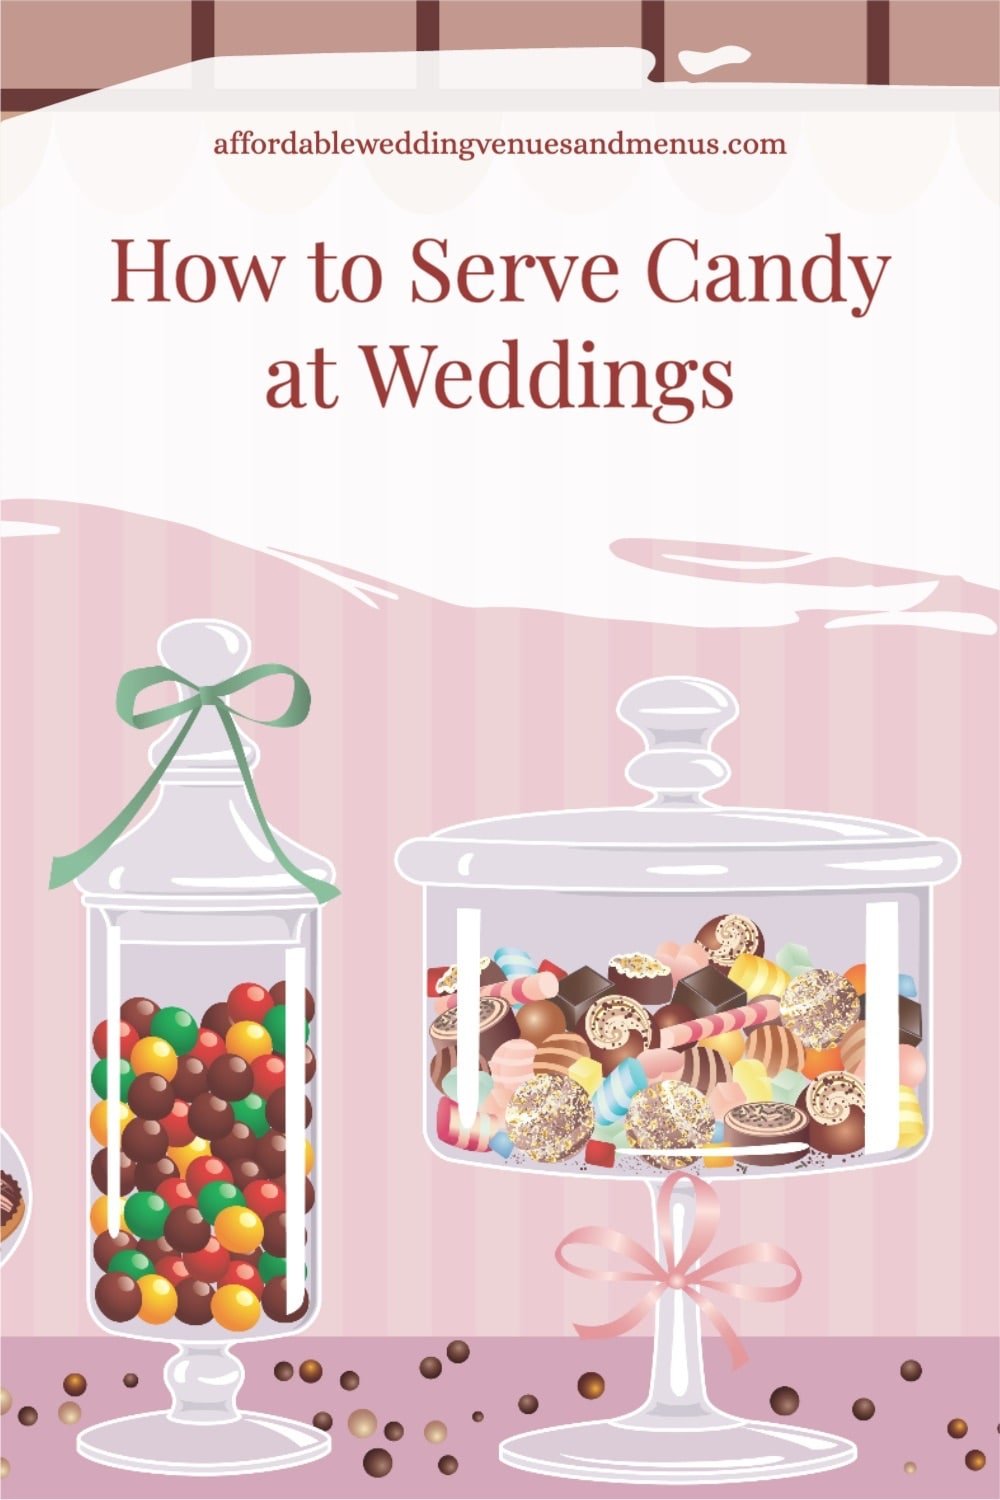 https://images.squarespace-cdn.com/content/v1/62c5bd6cd864265be0f52897/af9a8763-8945-4375-bc75-fa2a0530519e/How-to-Serve-Candy-at-Weddings-Pin.jpg